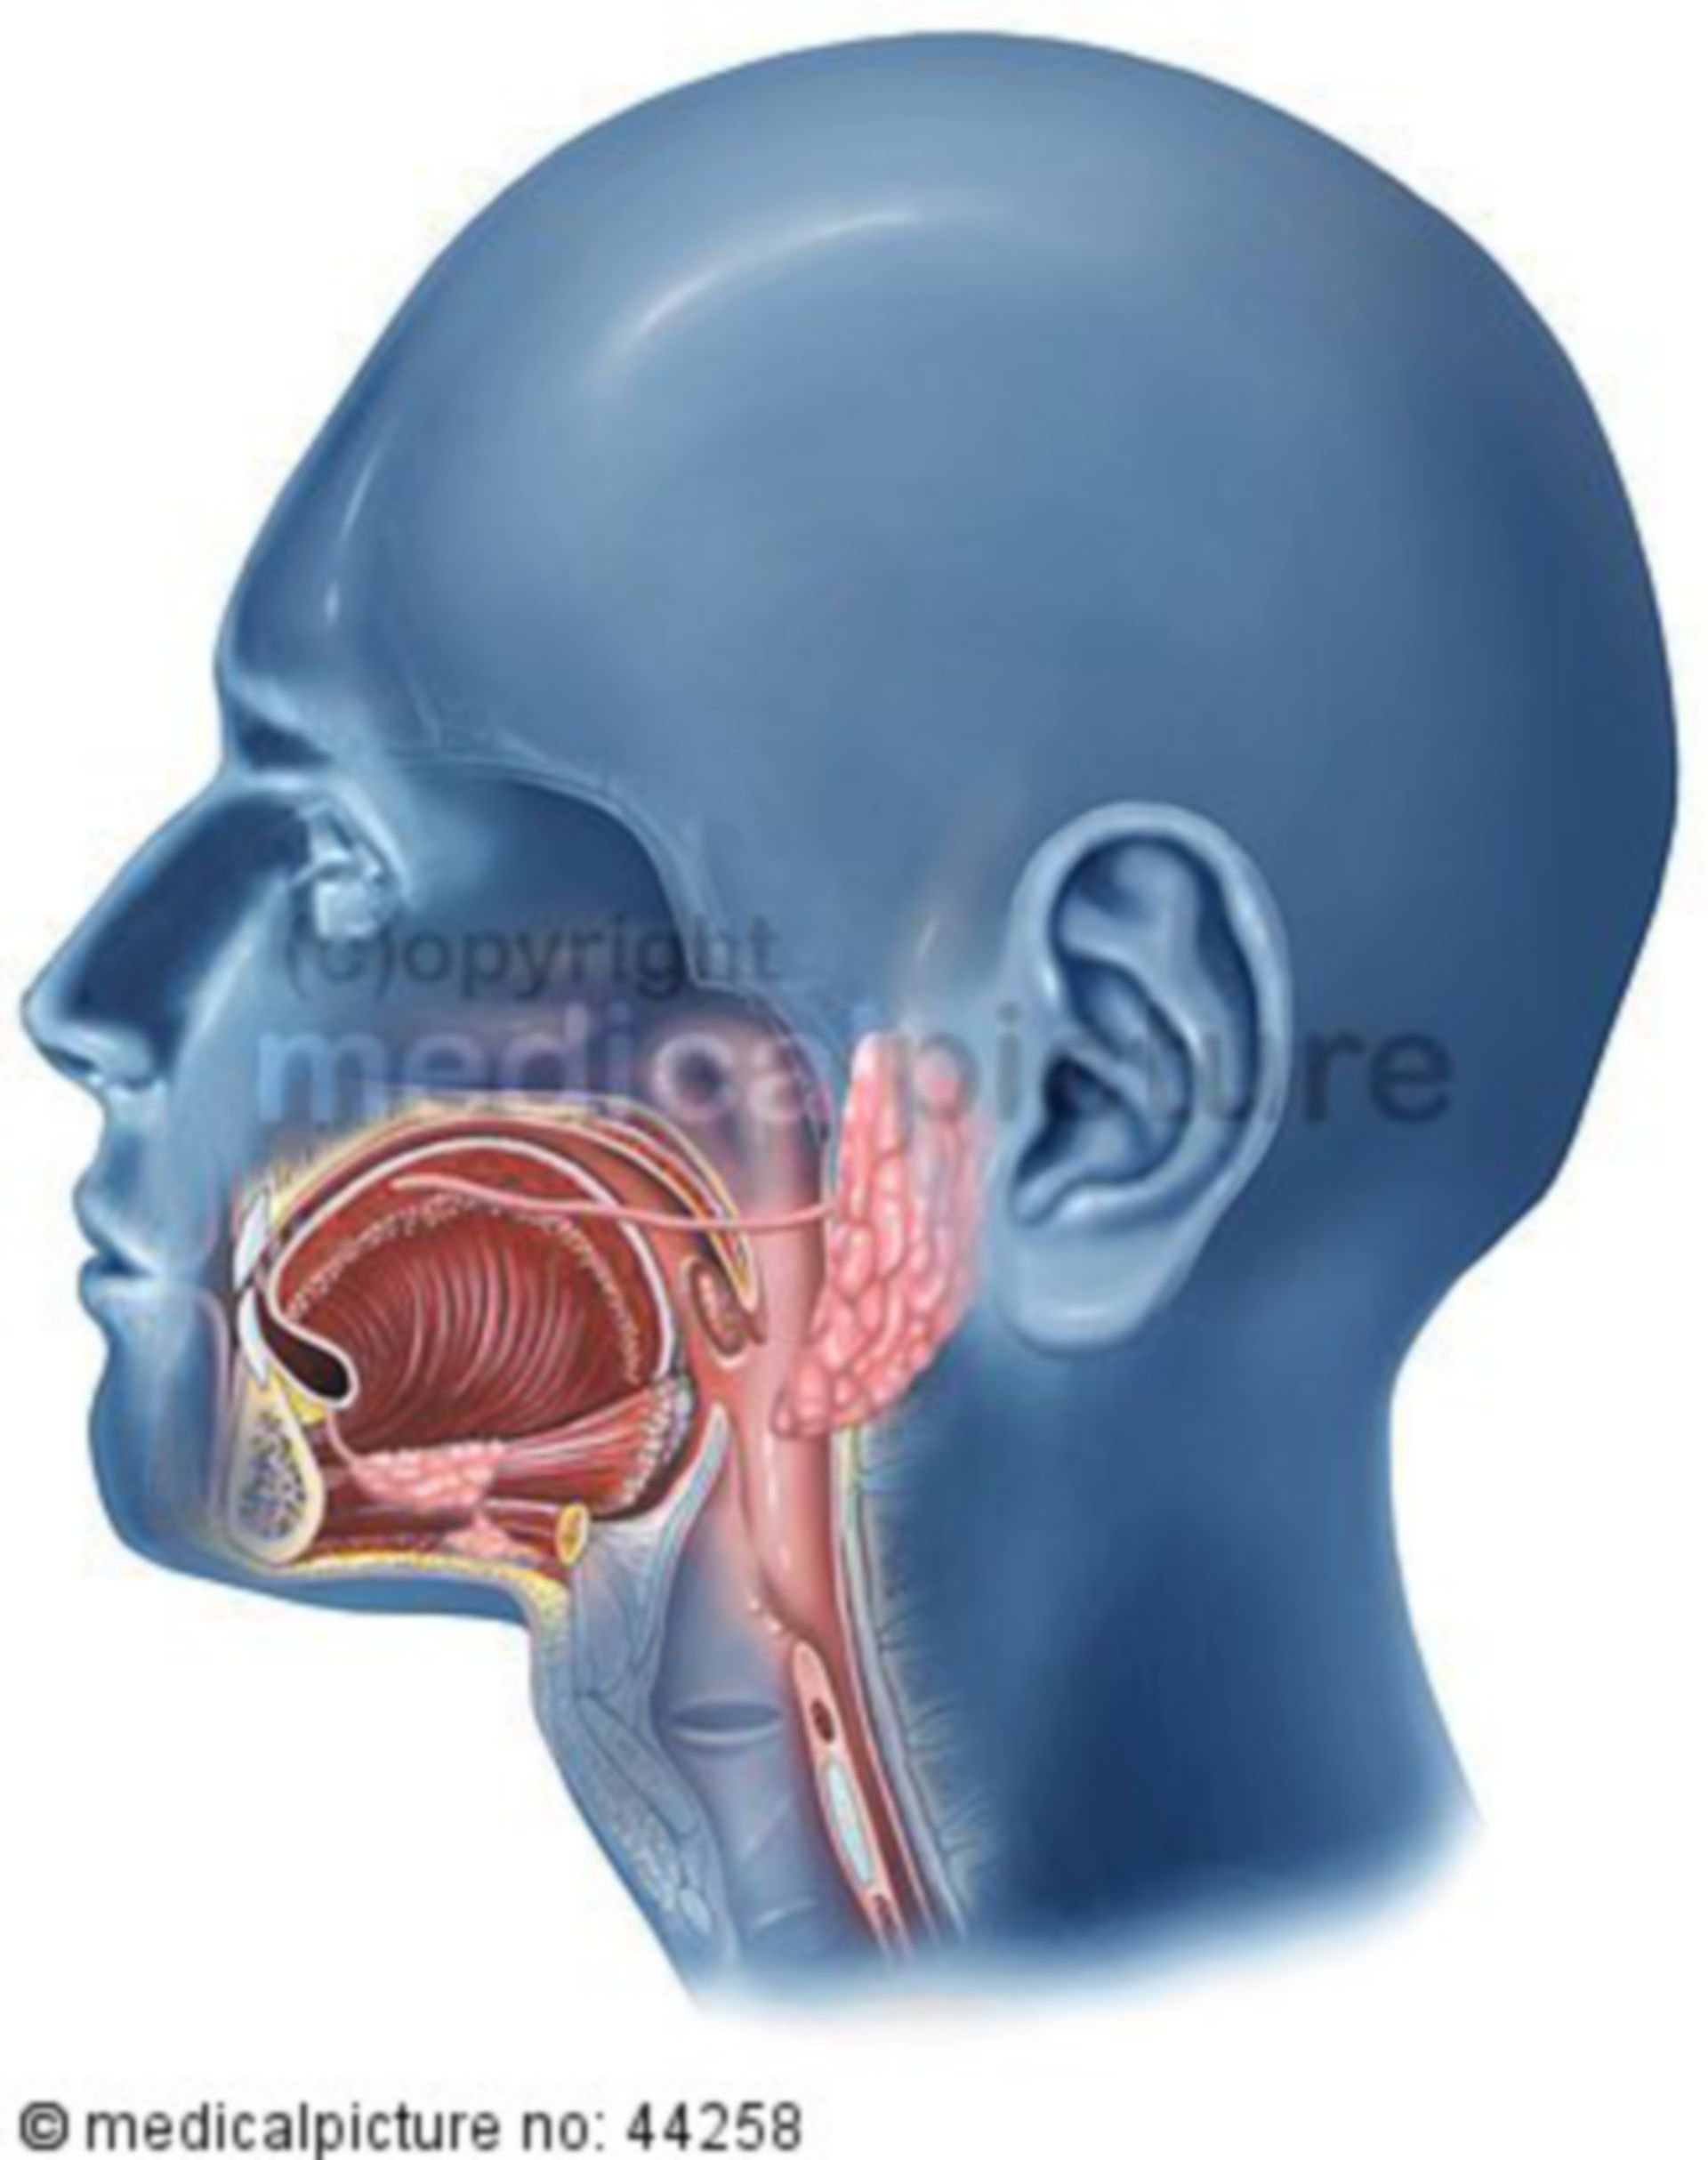  Mundhöhle, oberer Verdauungstrakt, oral cavity, superior alimentary canal 
